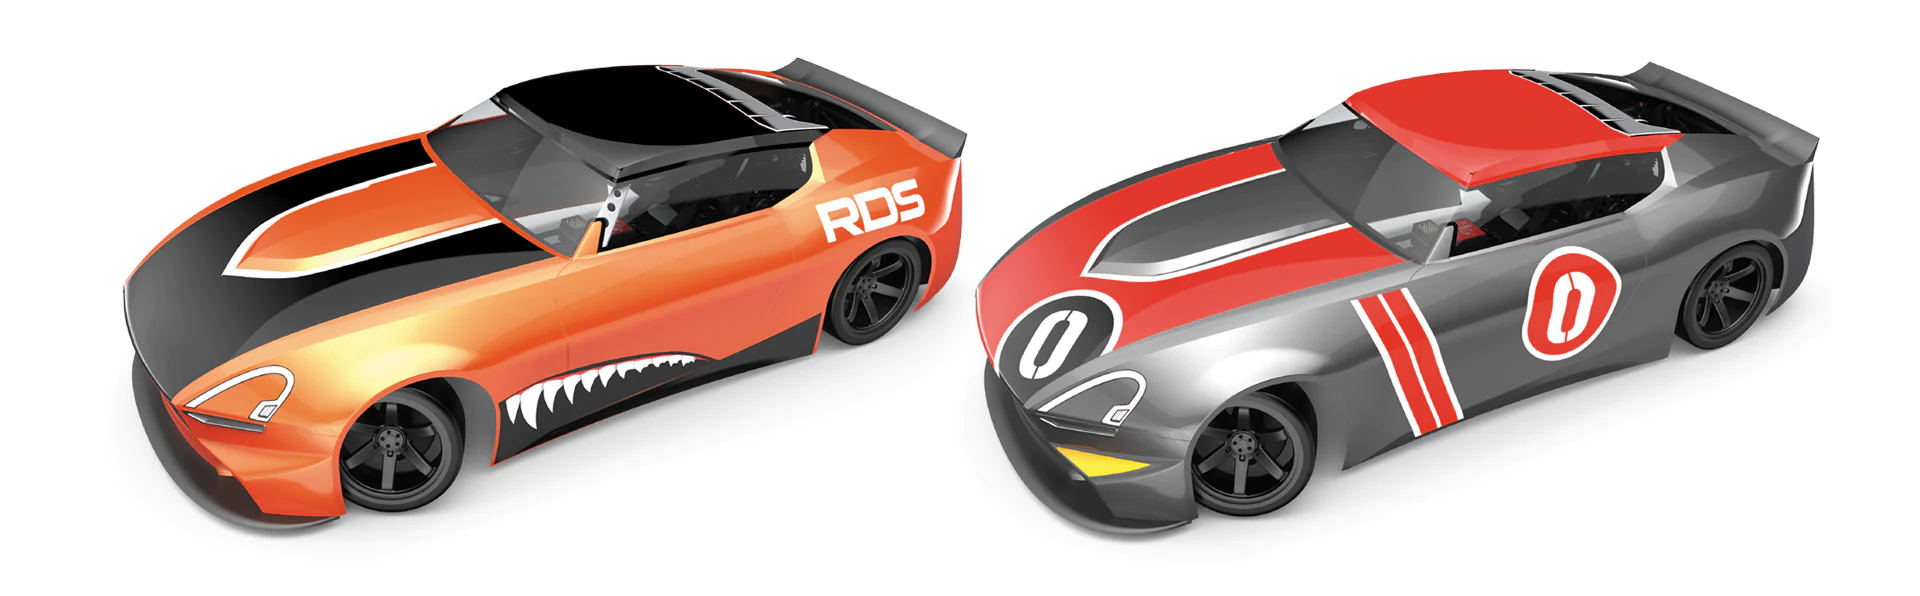 Redcat RDS Drift Car For Sale TeamRedcatShop.com